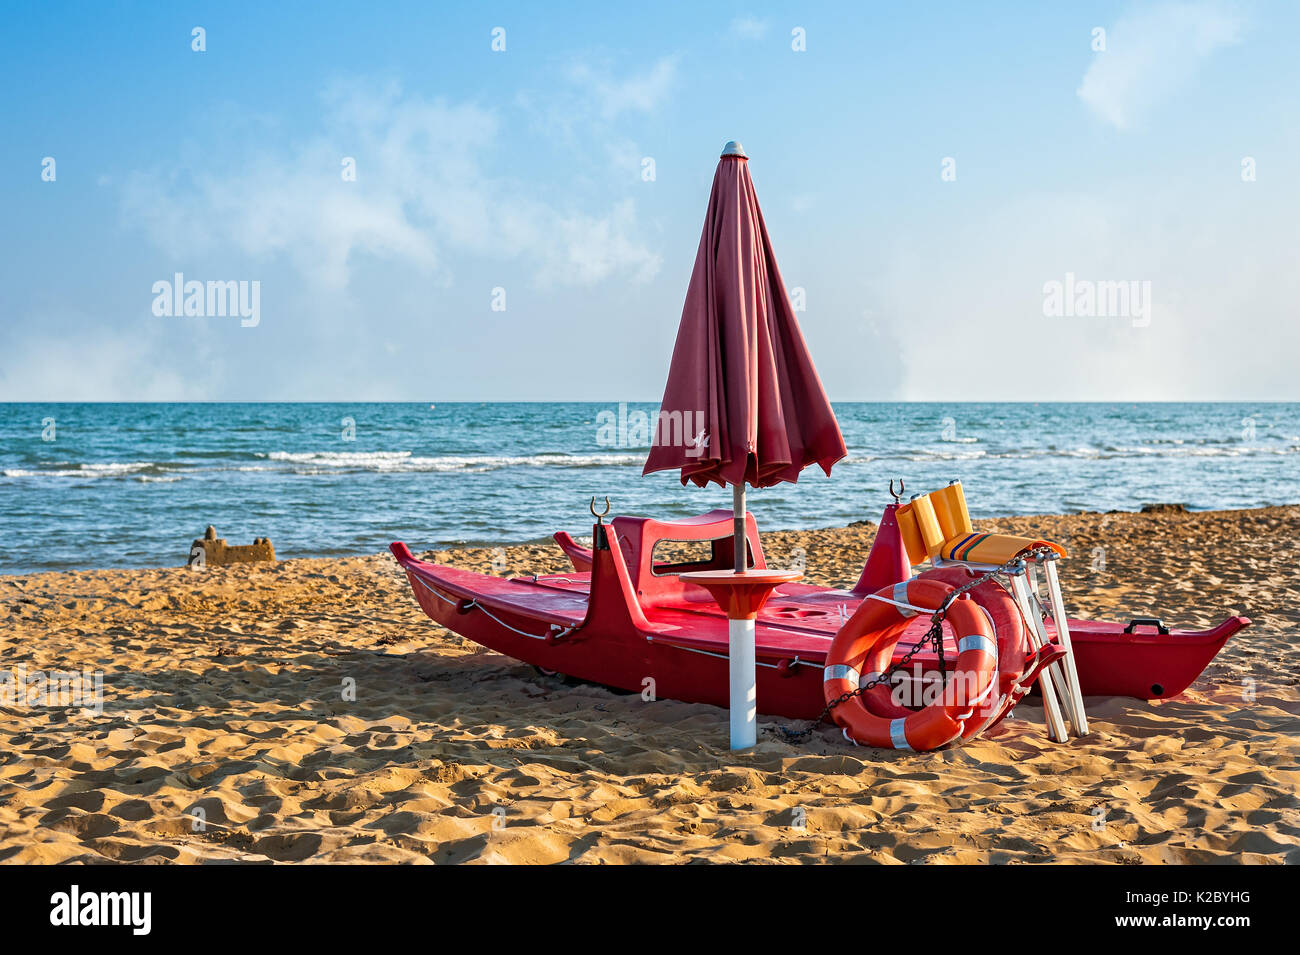 Lifeguard tools, umbrella,lifebuoy and rescue boat against beach,sea and sky Stock Photo